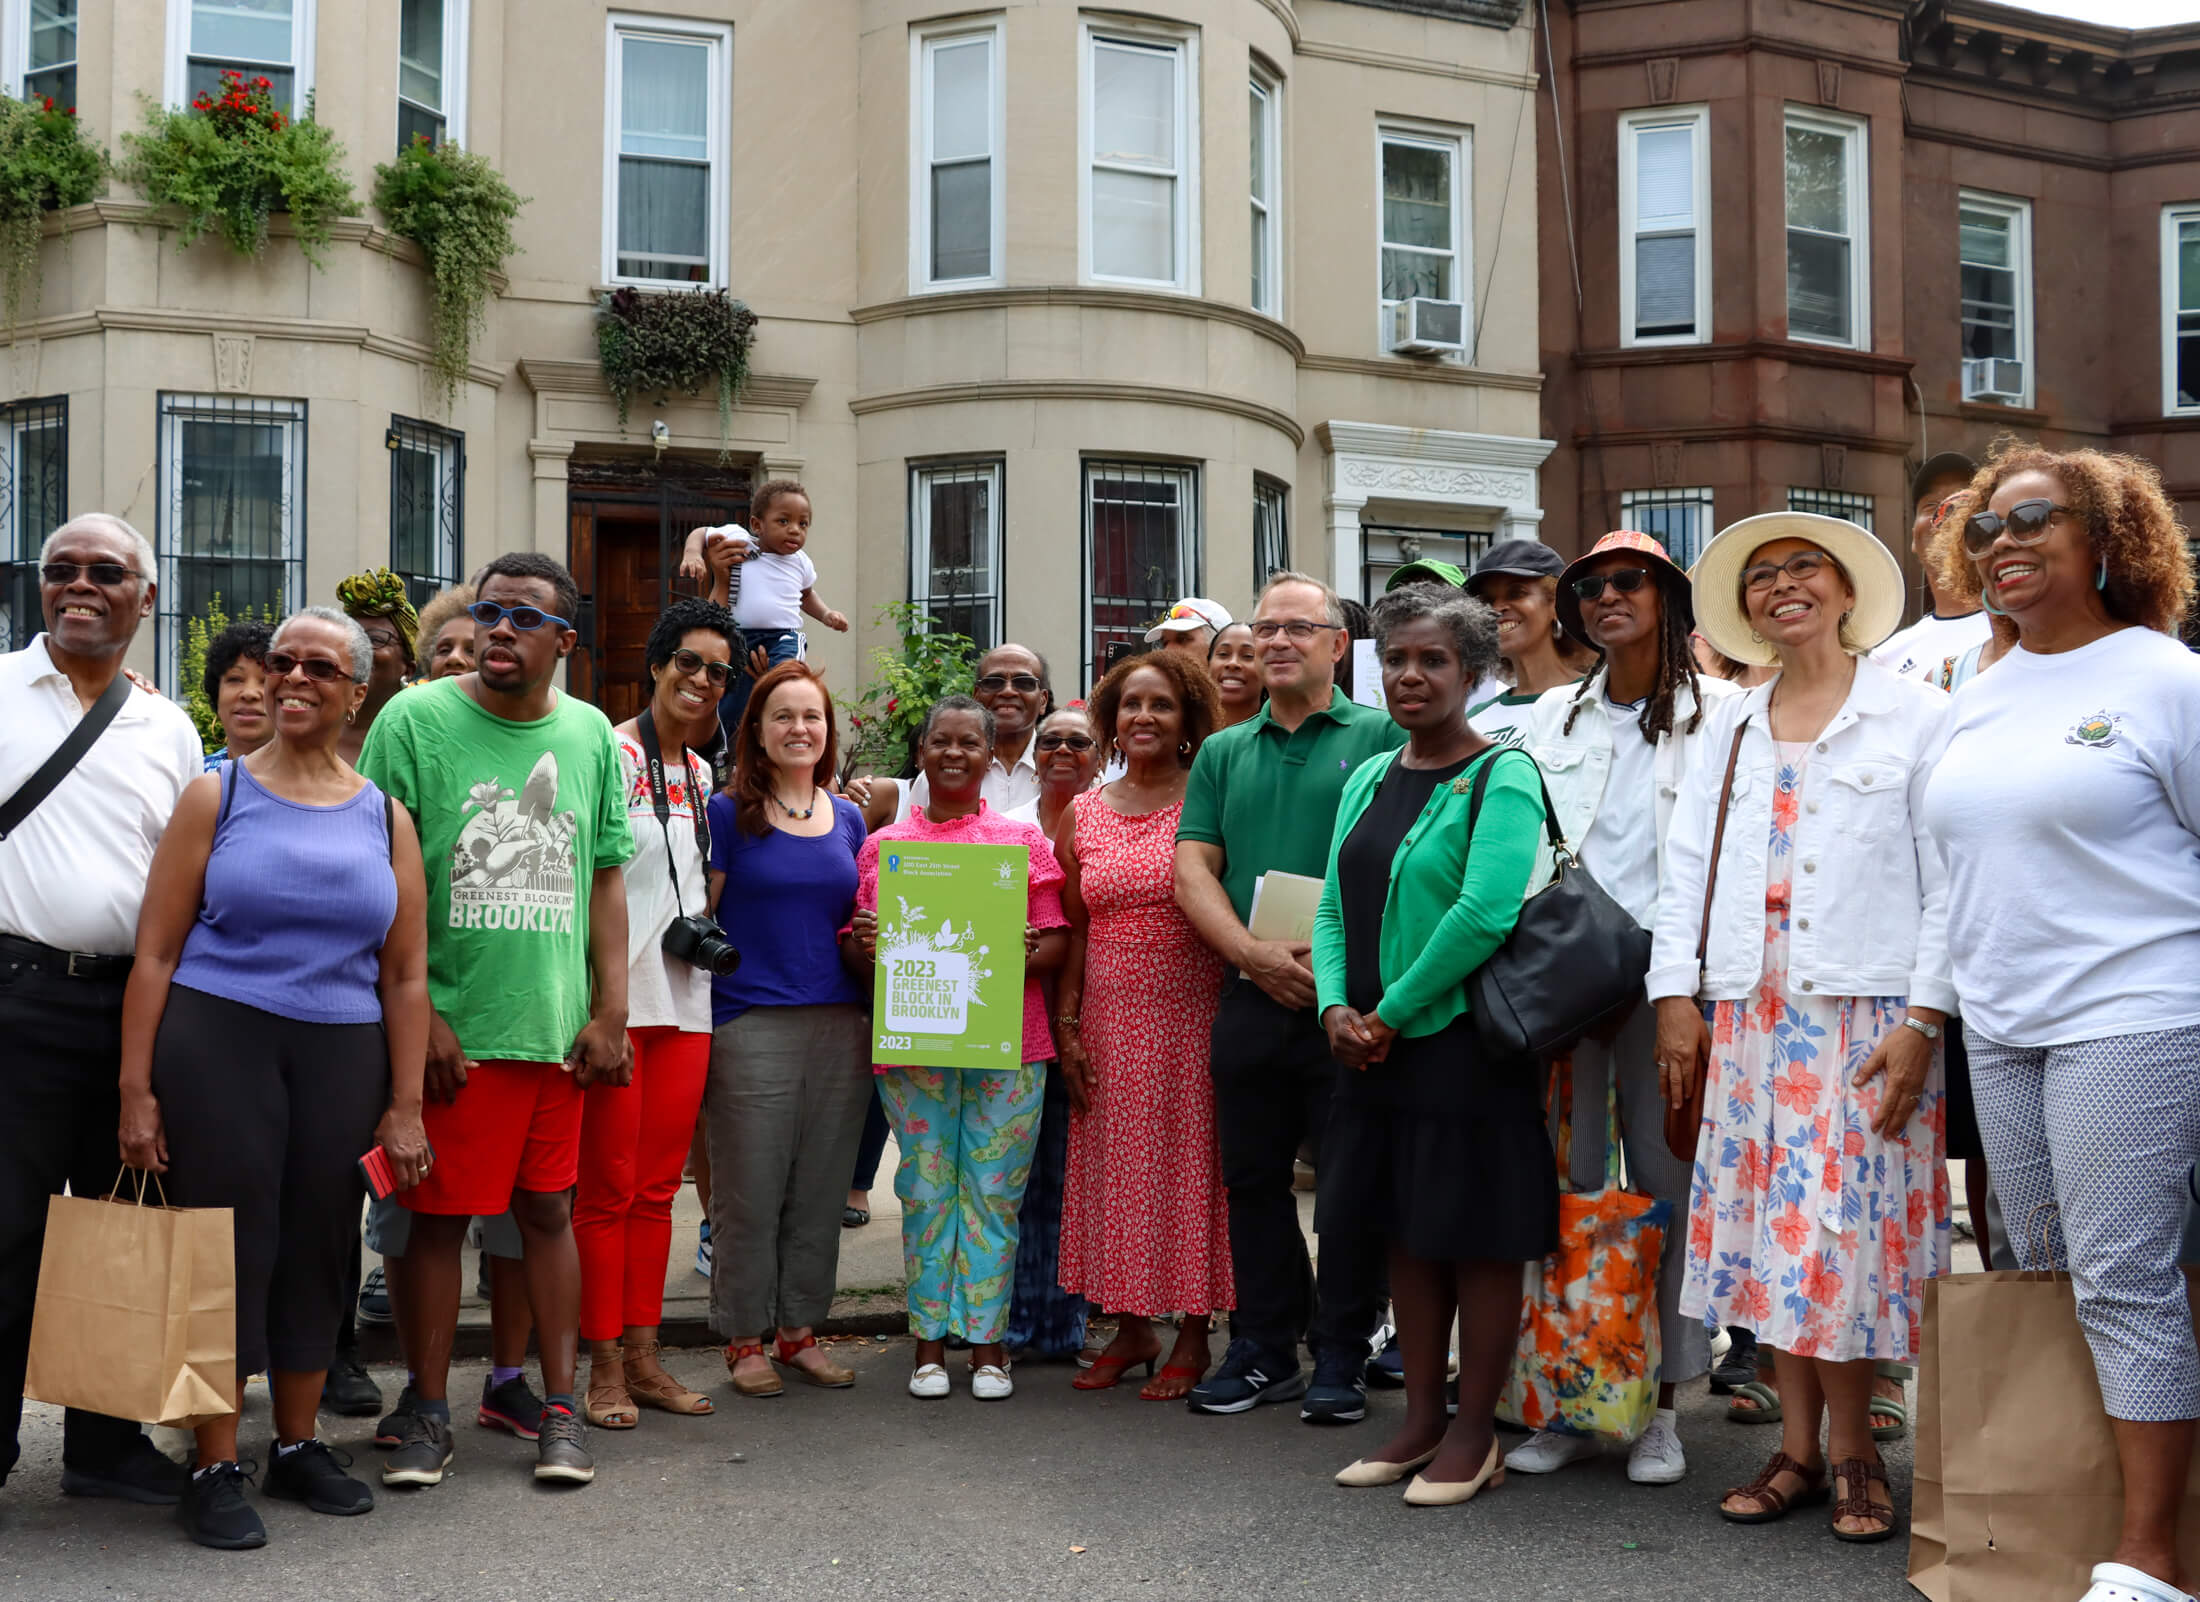 winners of the greenest block in brooklyn gathered on east 25th street